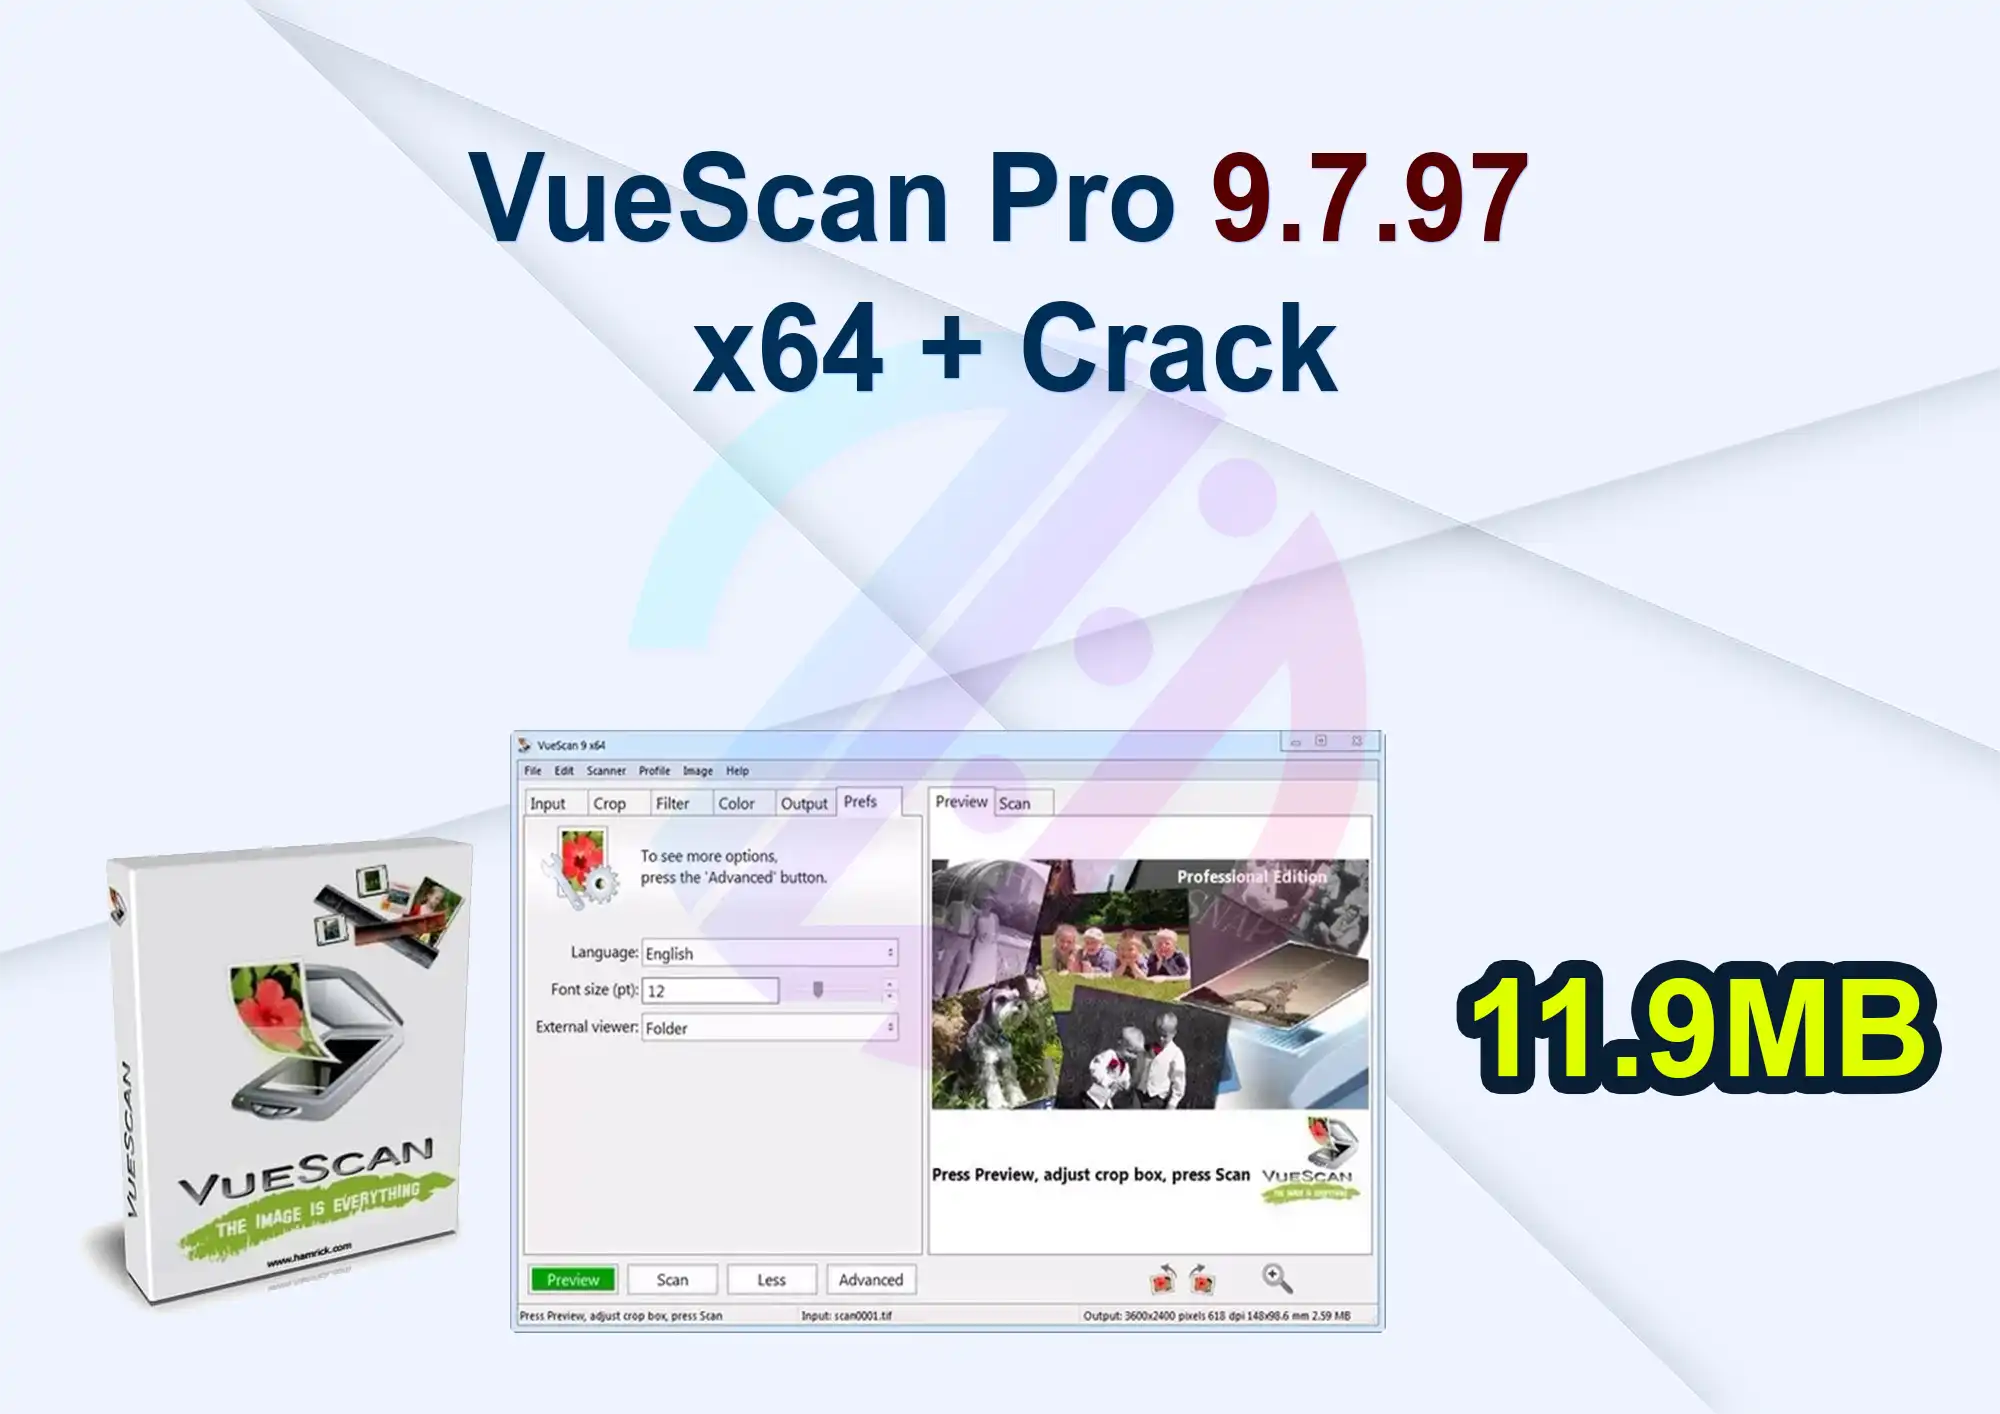 VueScan Pro 9.7.97 x64 + Crack